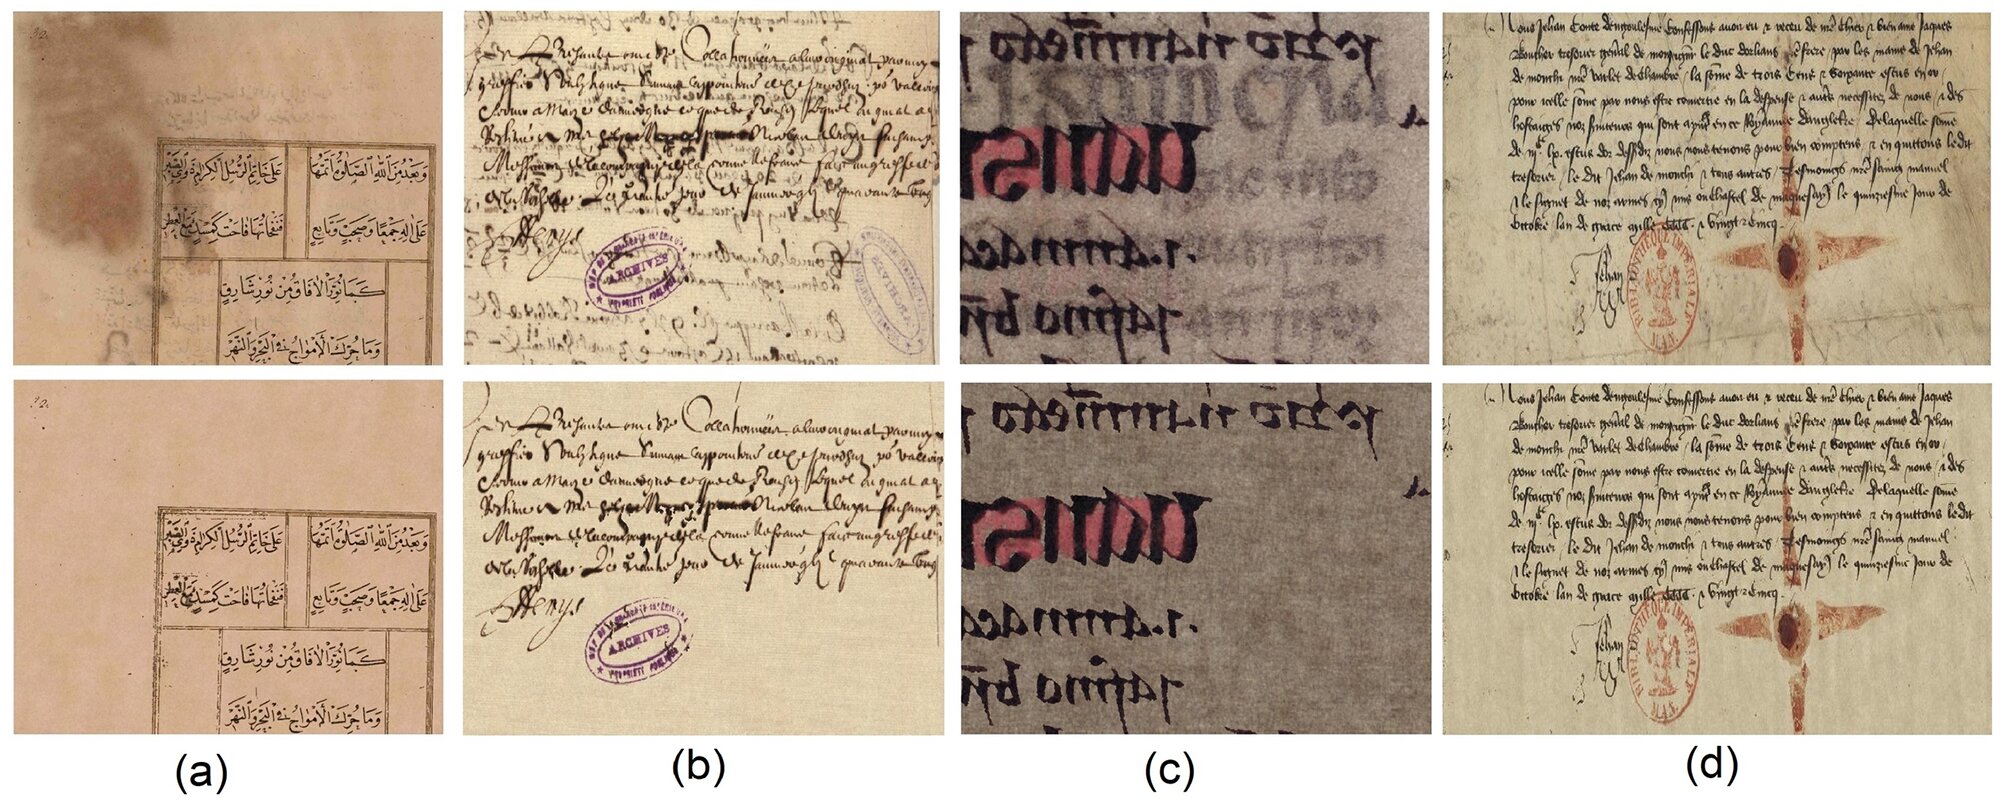 Digital restoration of historical documents